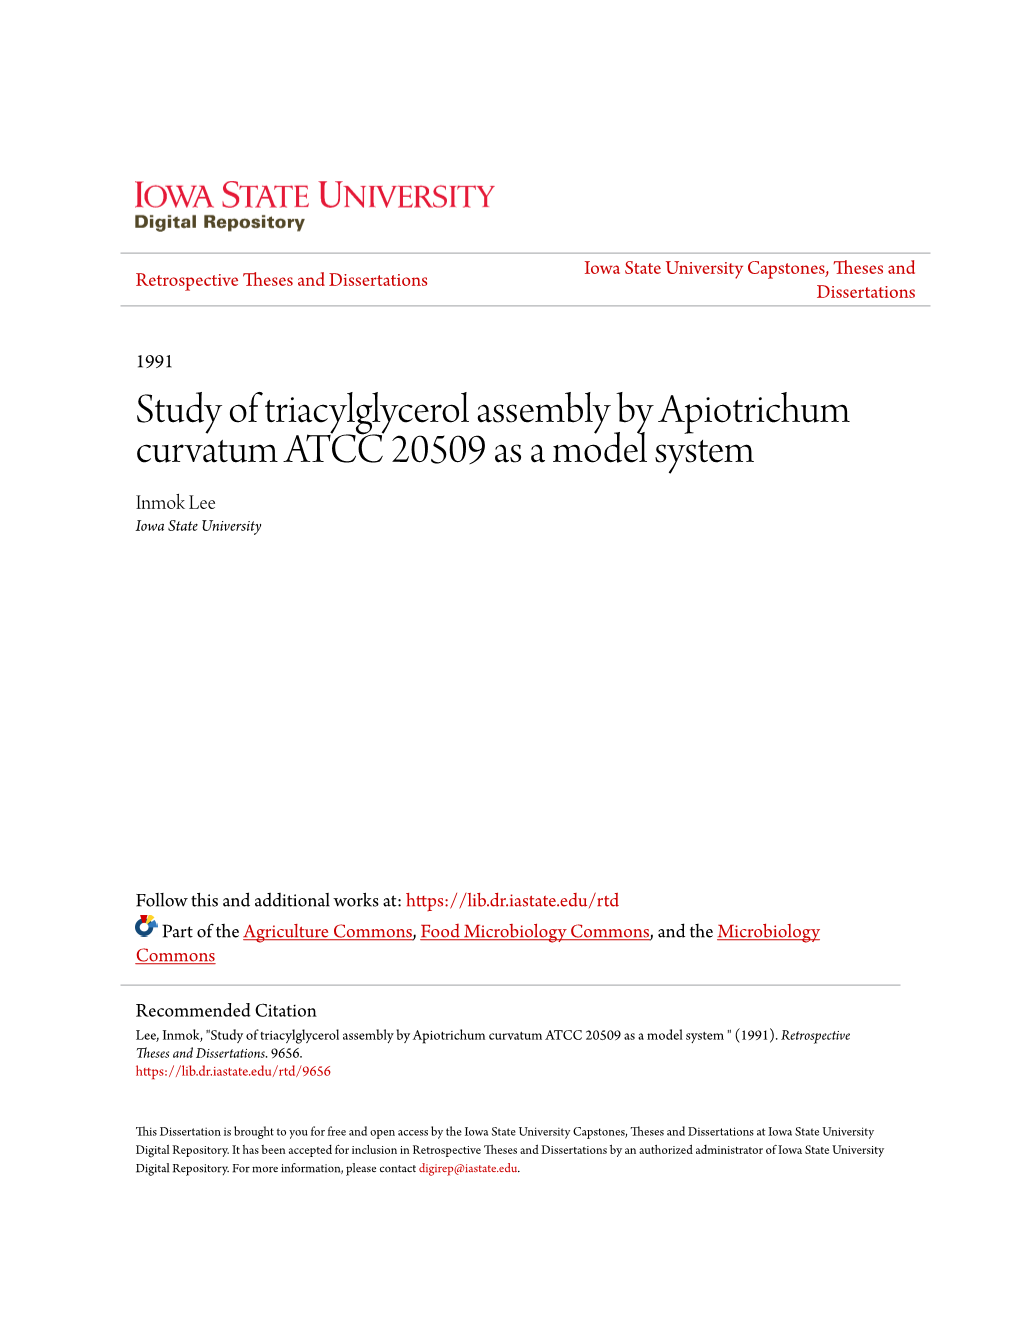 Study of Triacylglycerol Assembly by Apiotrichum Curvatum ATCC 20509 As a Model System Inmok Lee Iowa State University